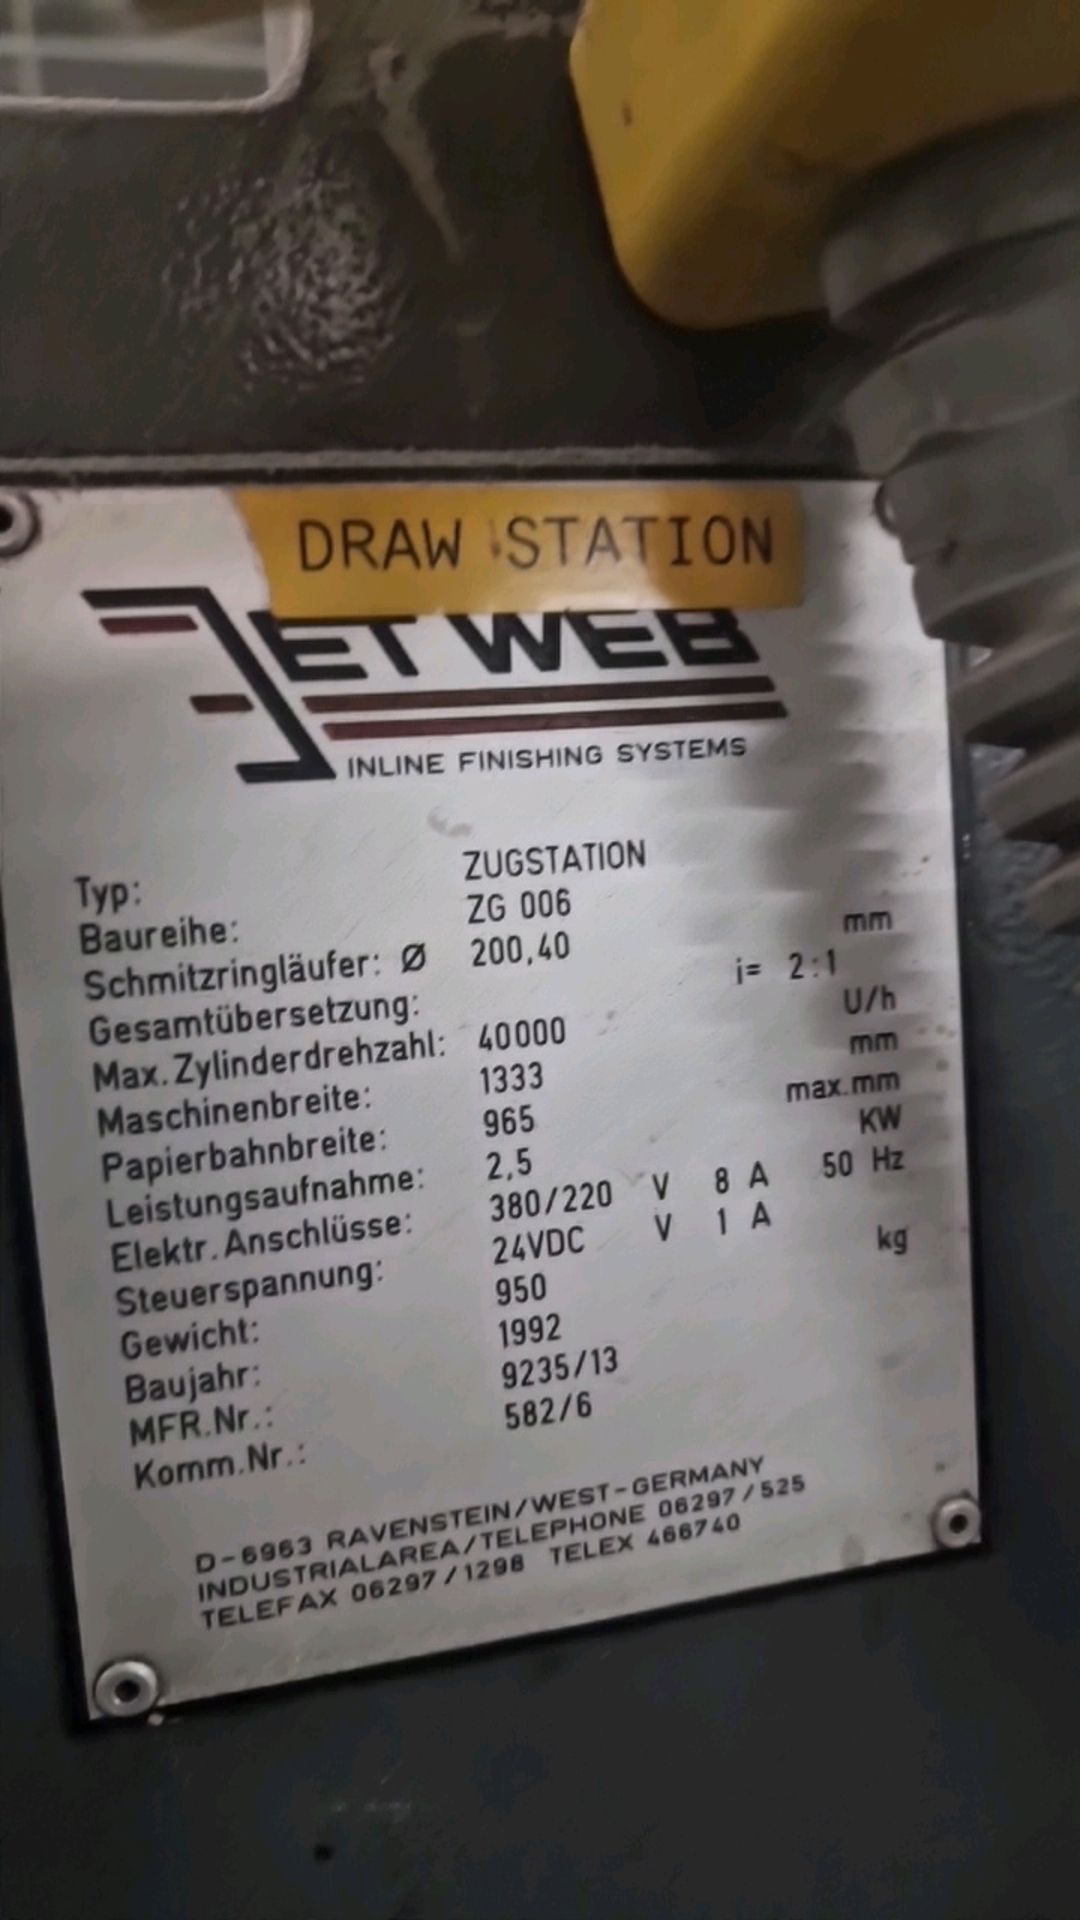 Jet Web Draw Station - Image 3 of 6